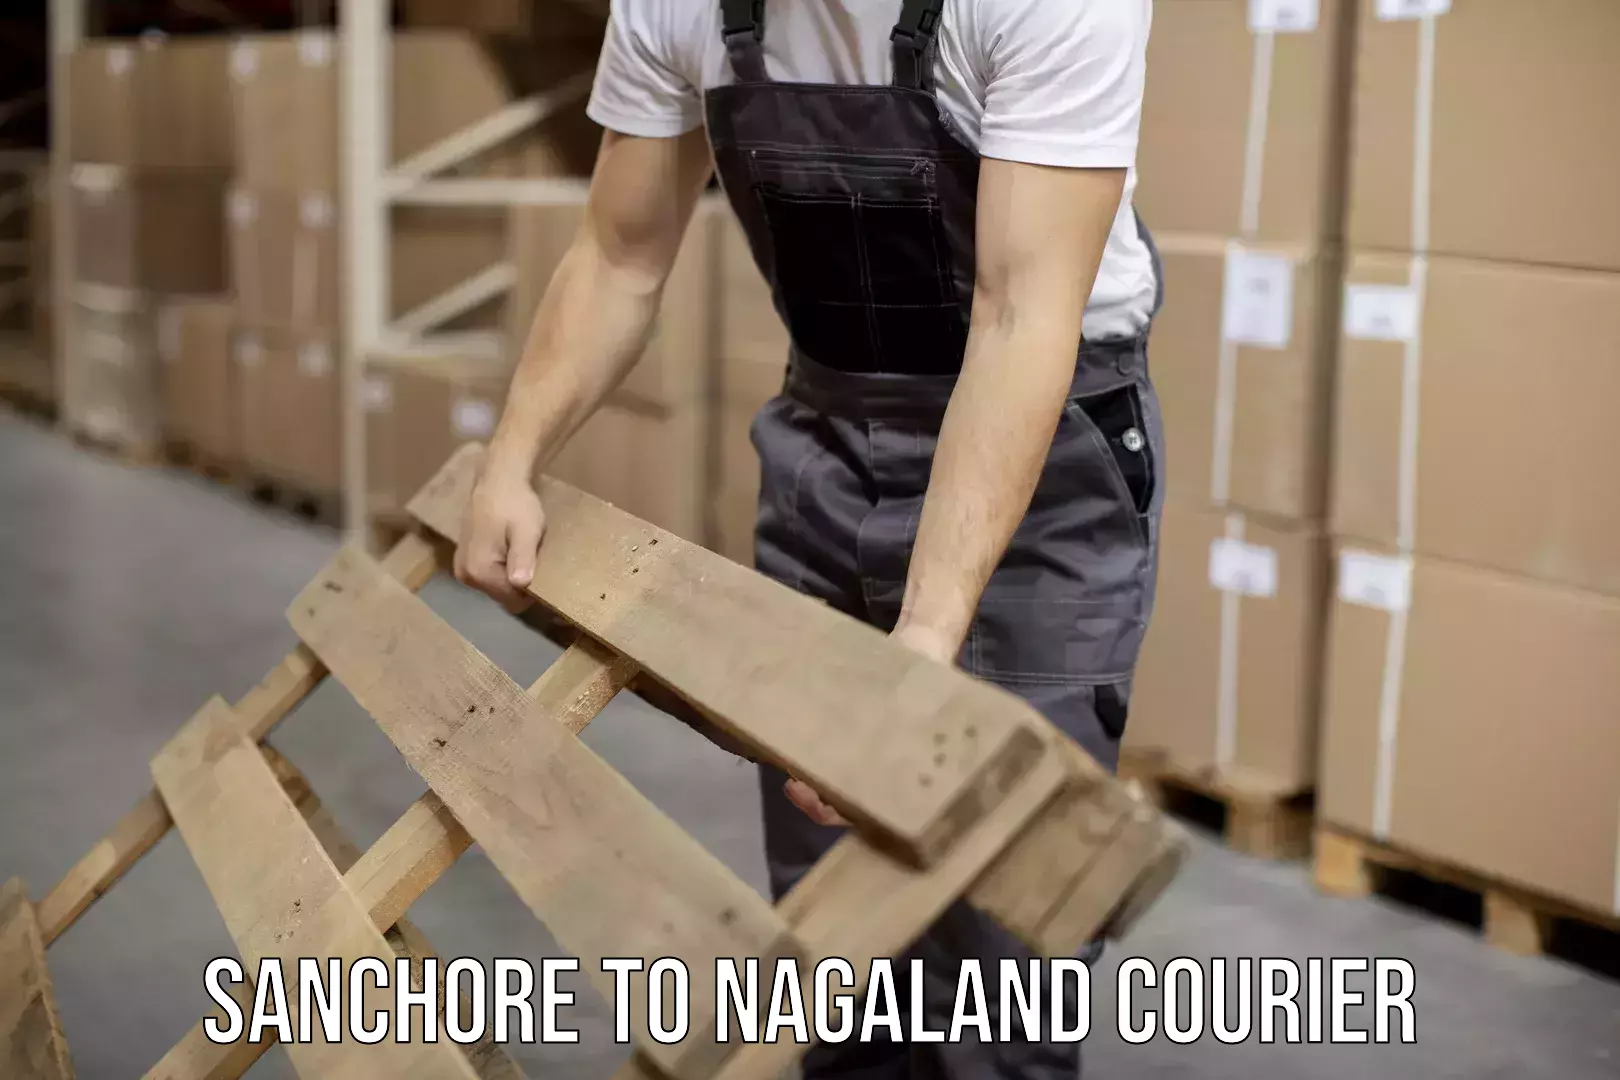 Reliable courier service Sanchore to Nagaland